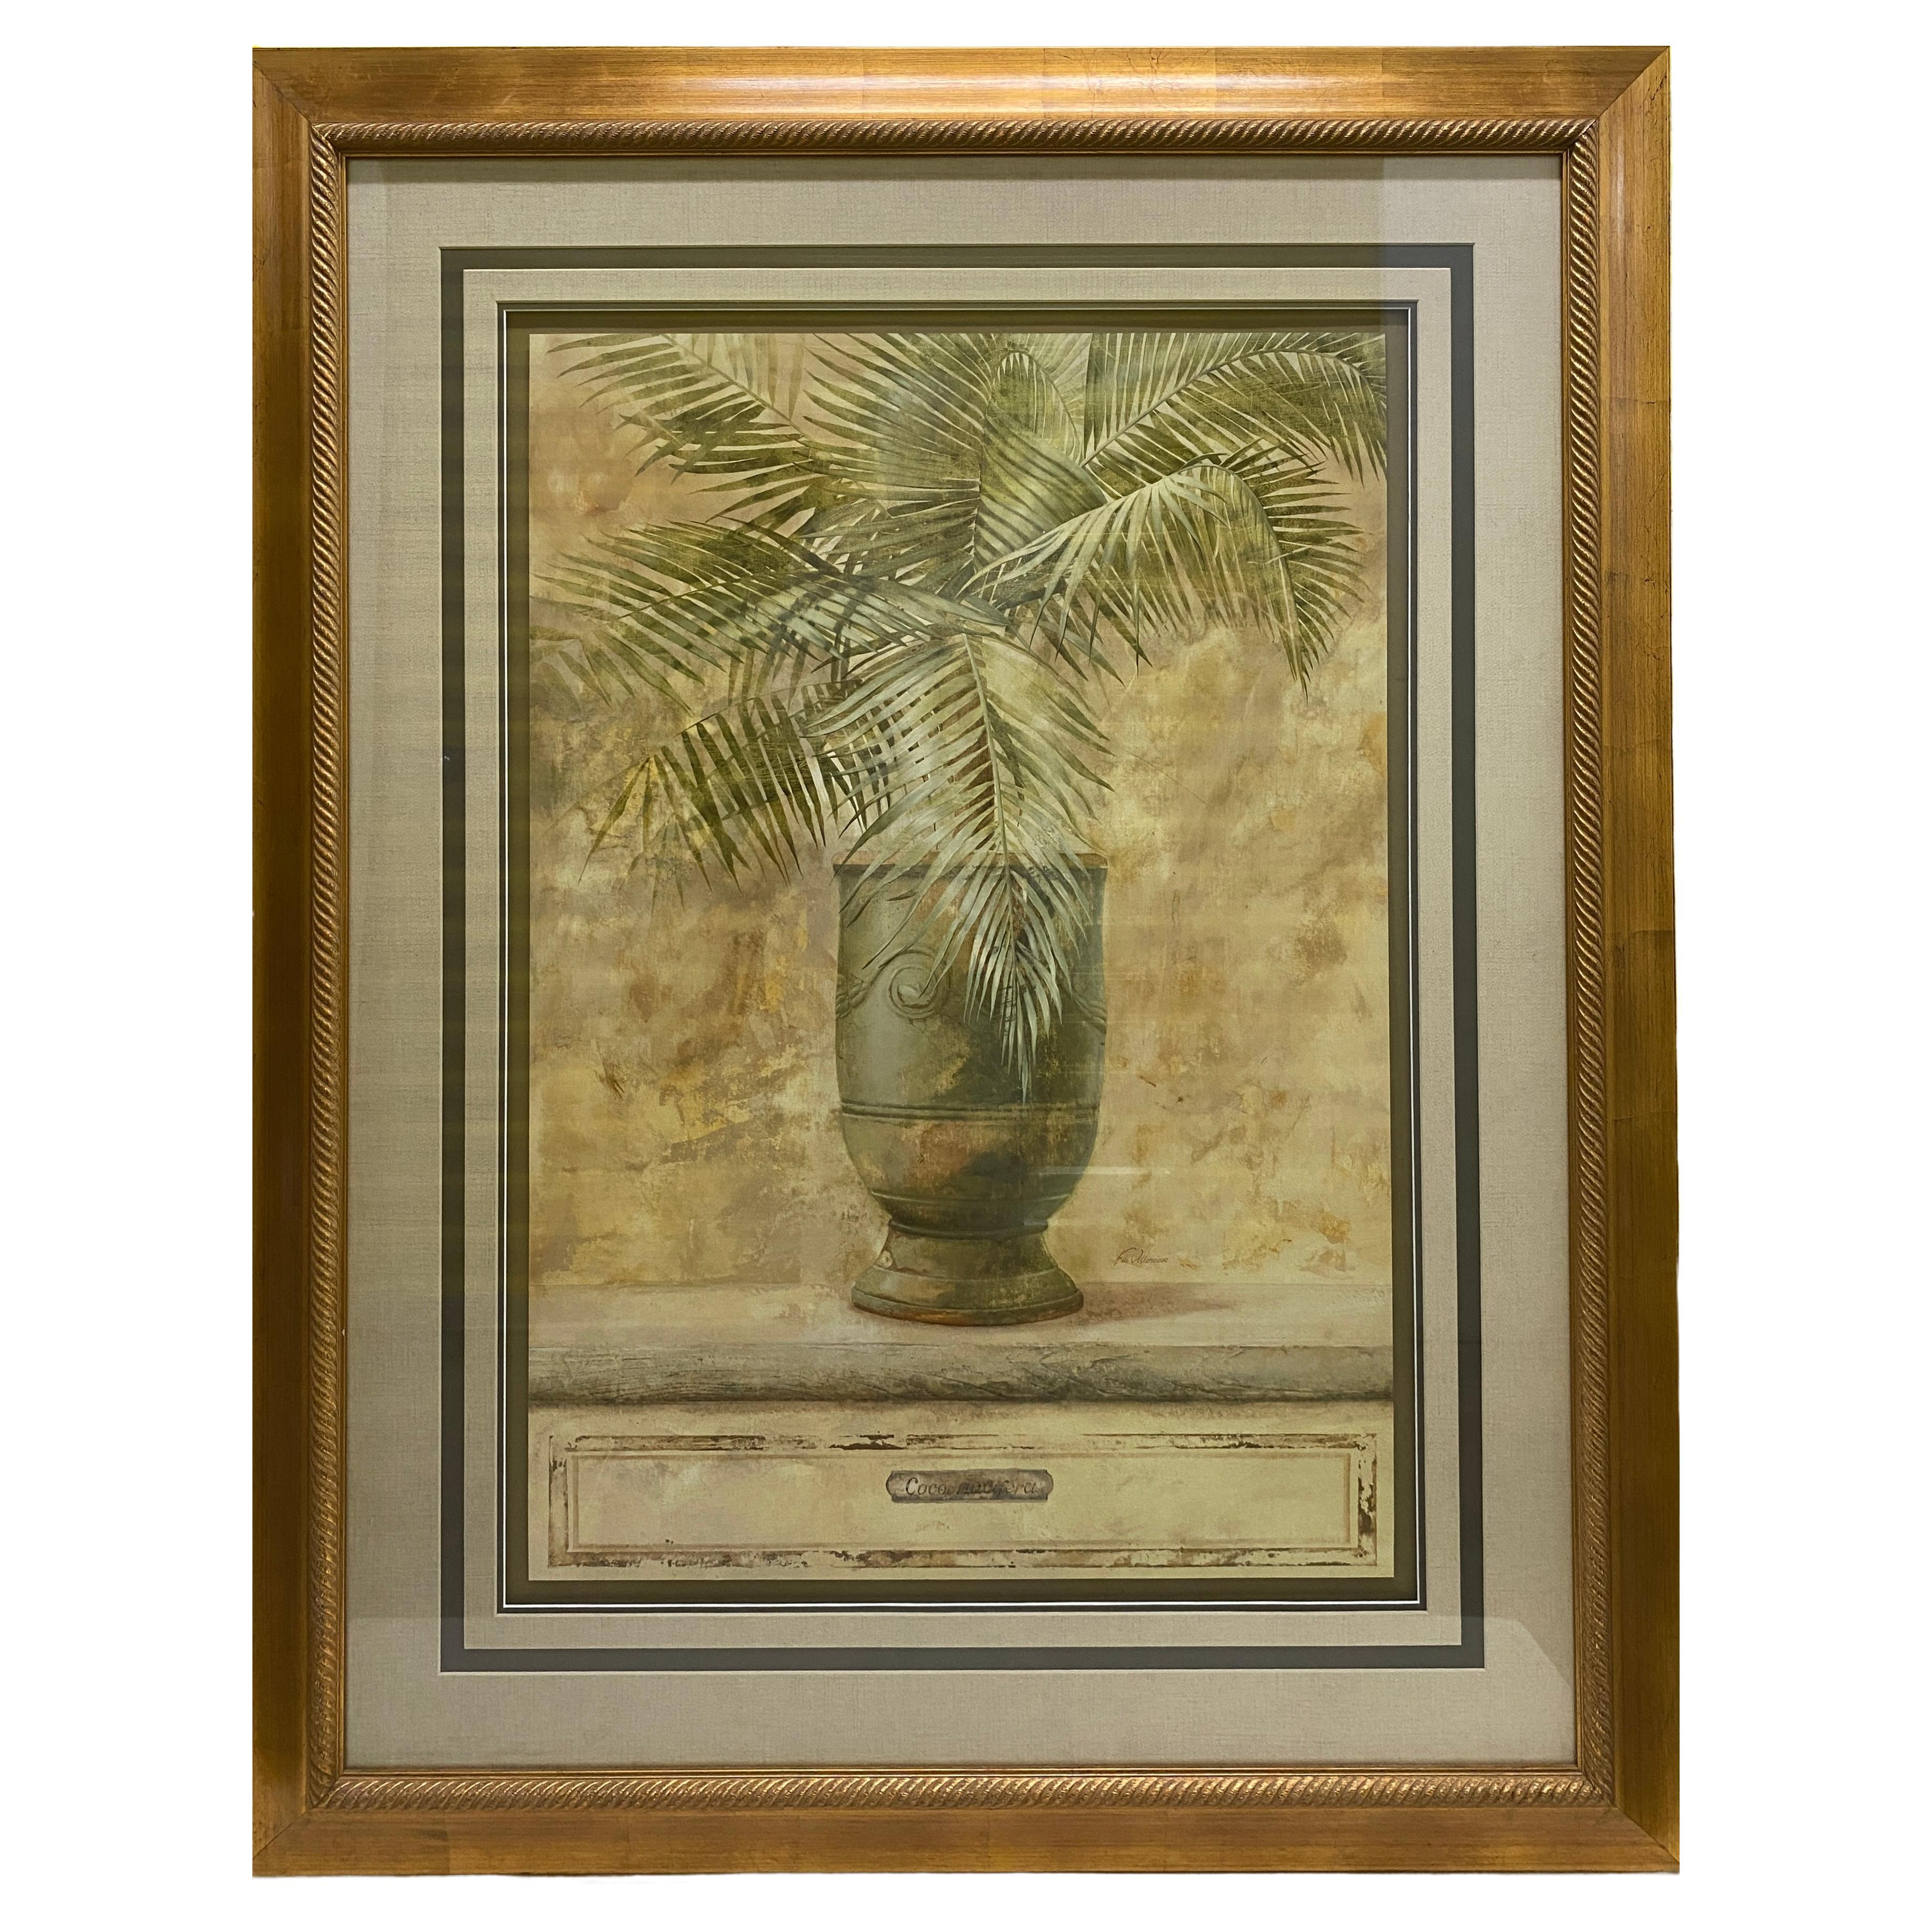  Large Botanical Art Print in Custom Giltwood Frame  For Sale